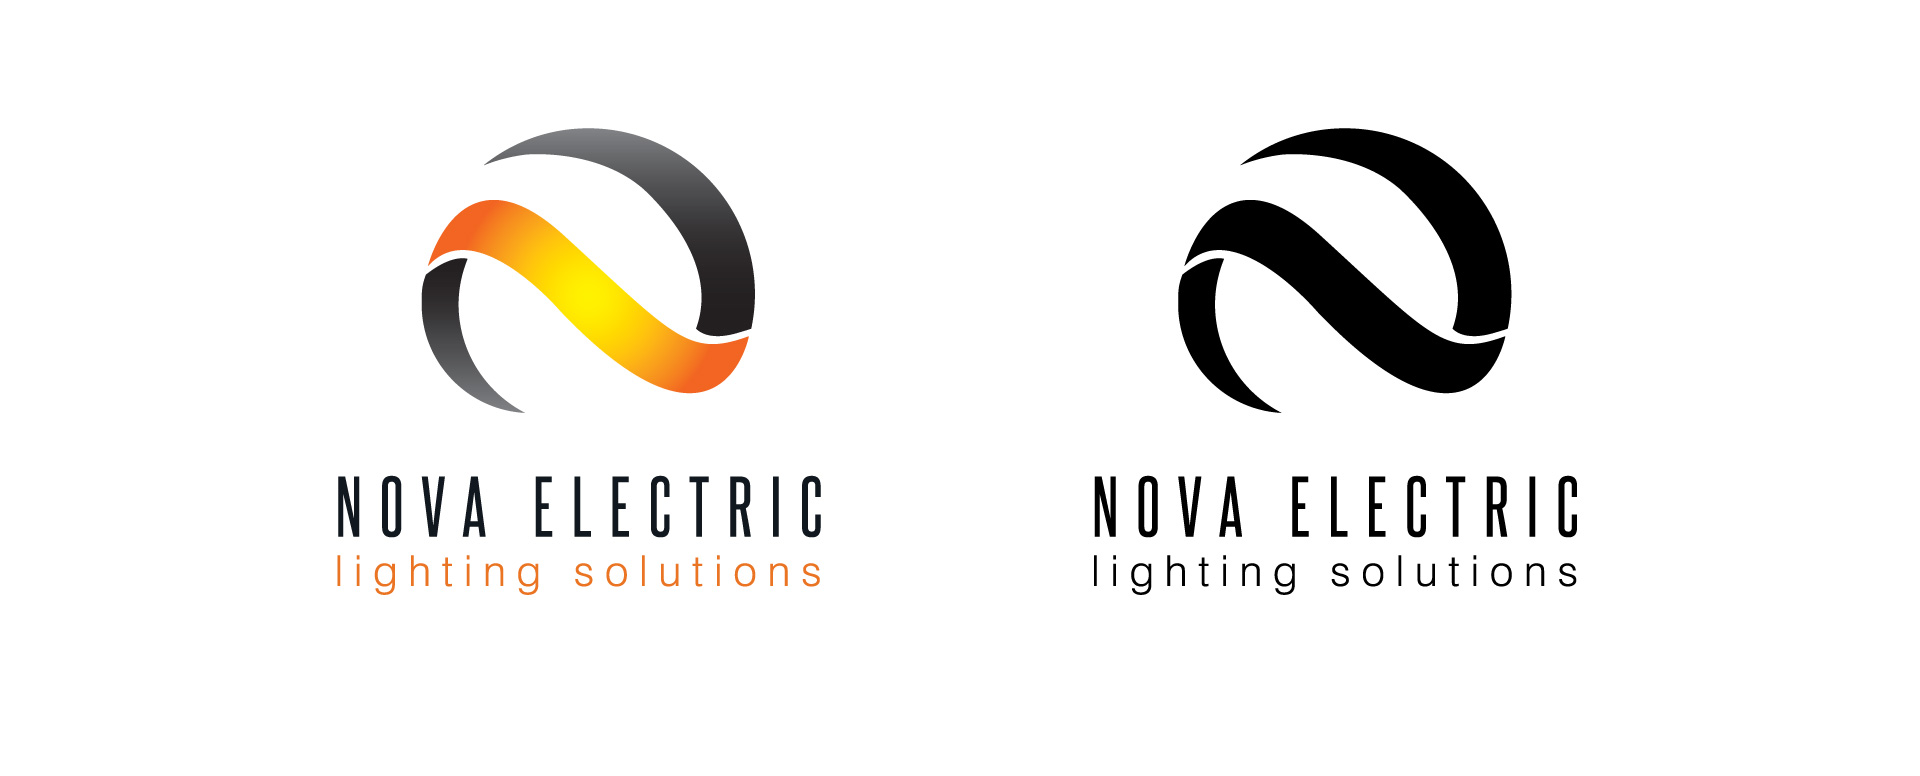 nova electric lighting solutions logo 02